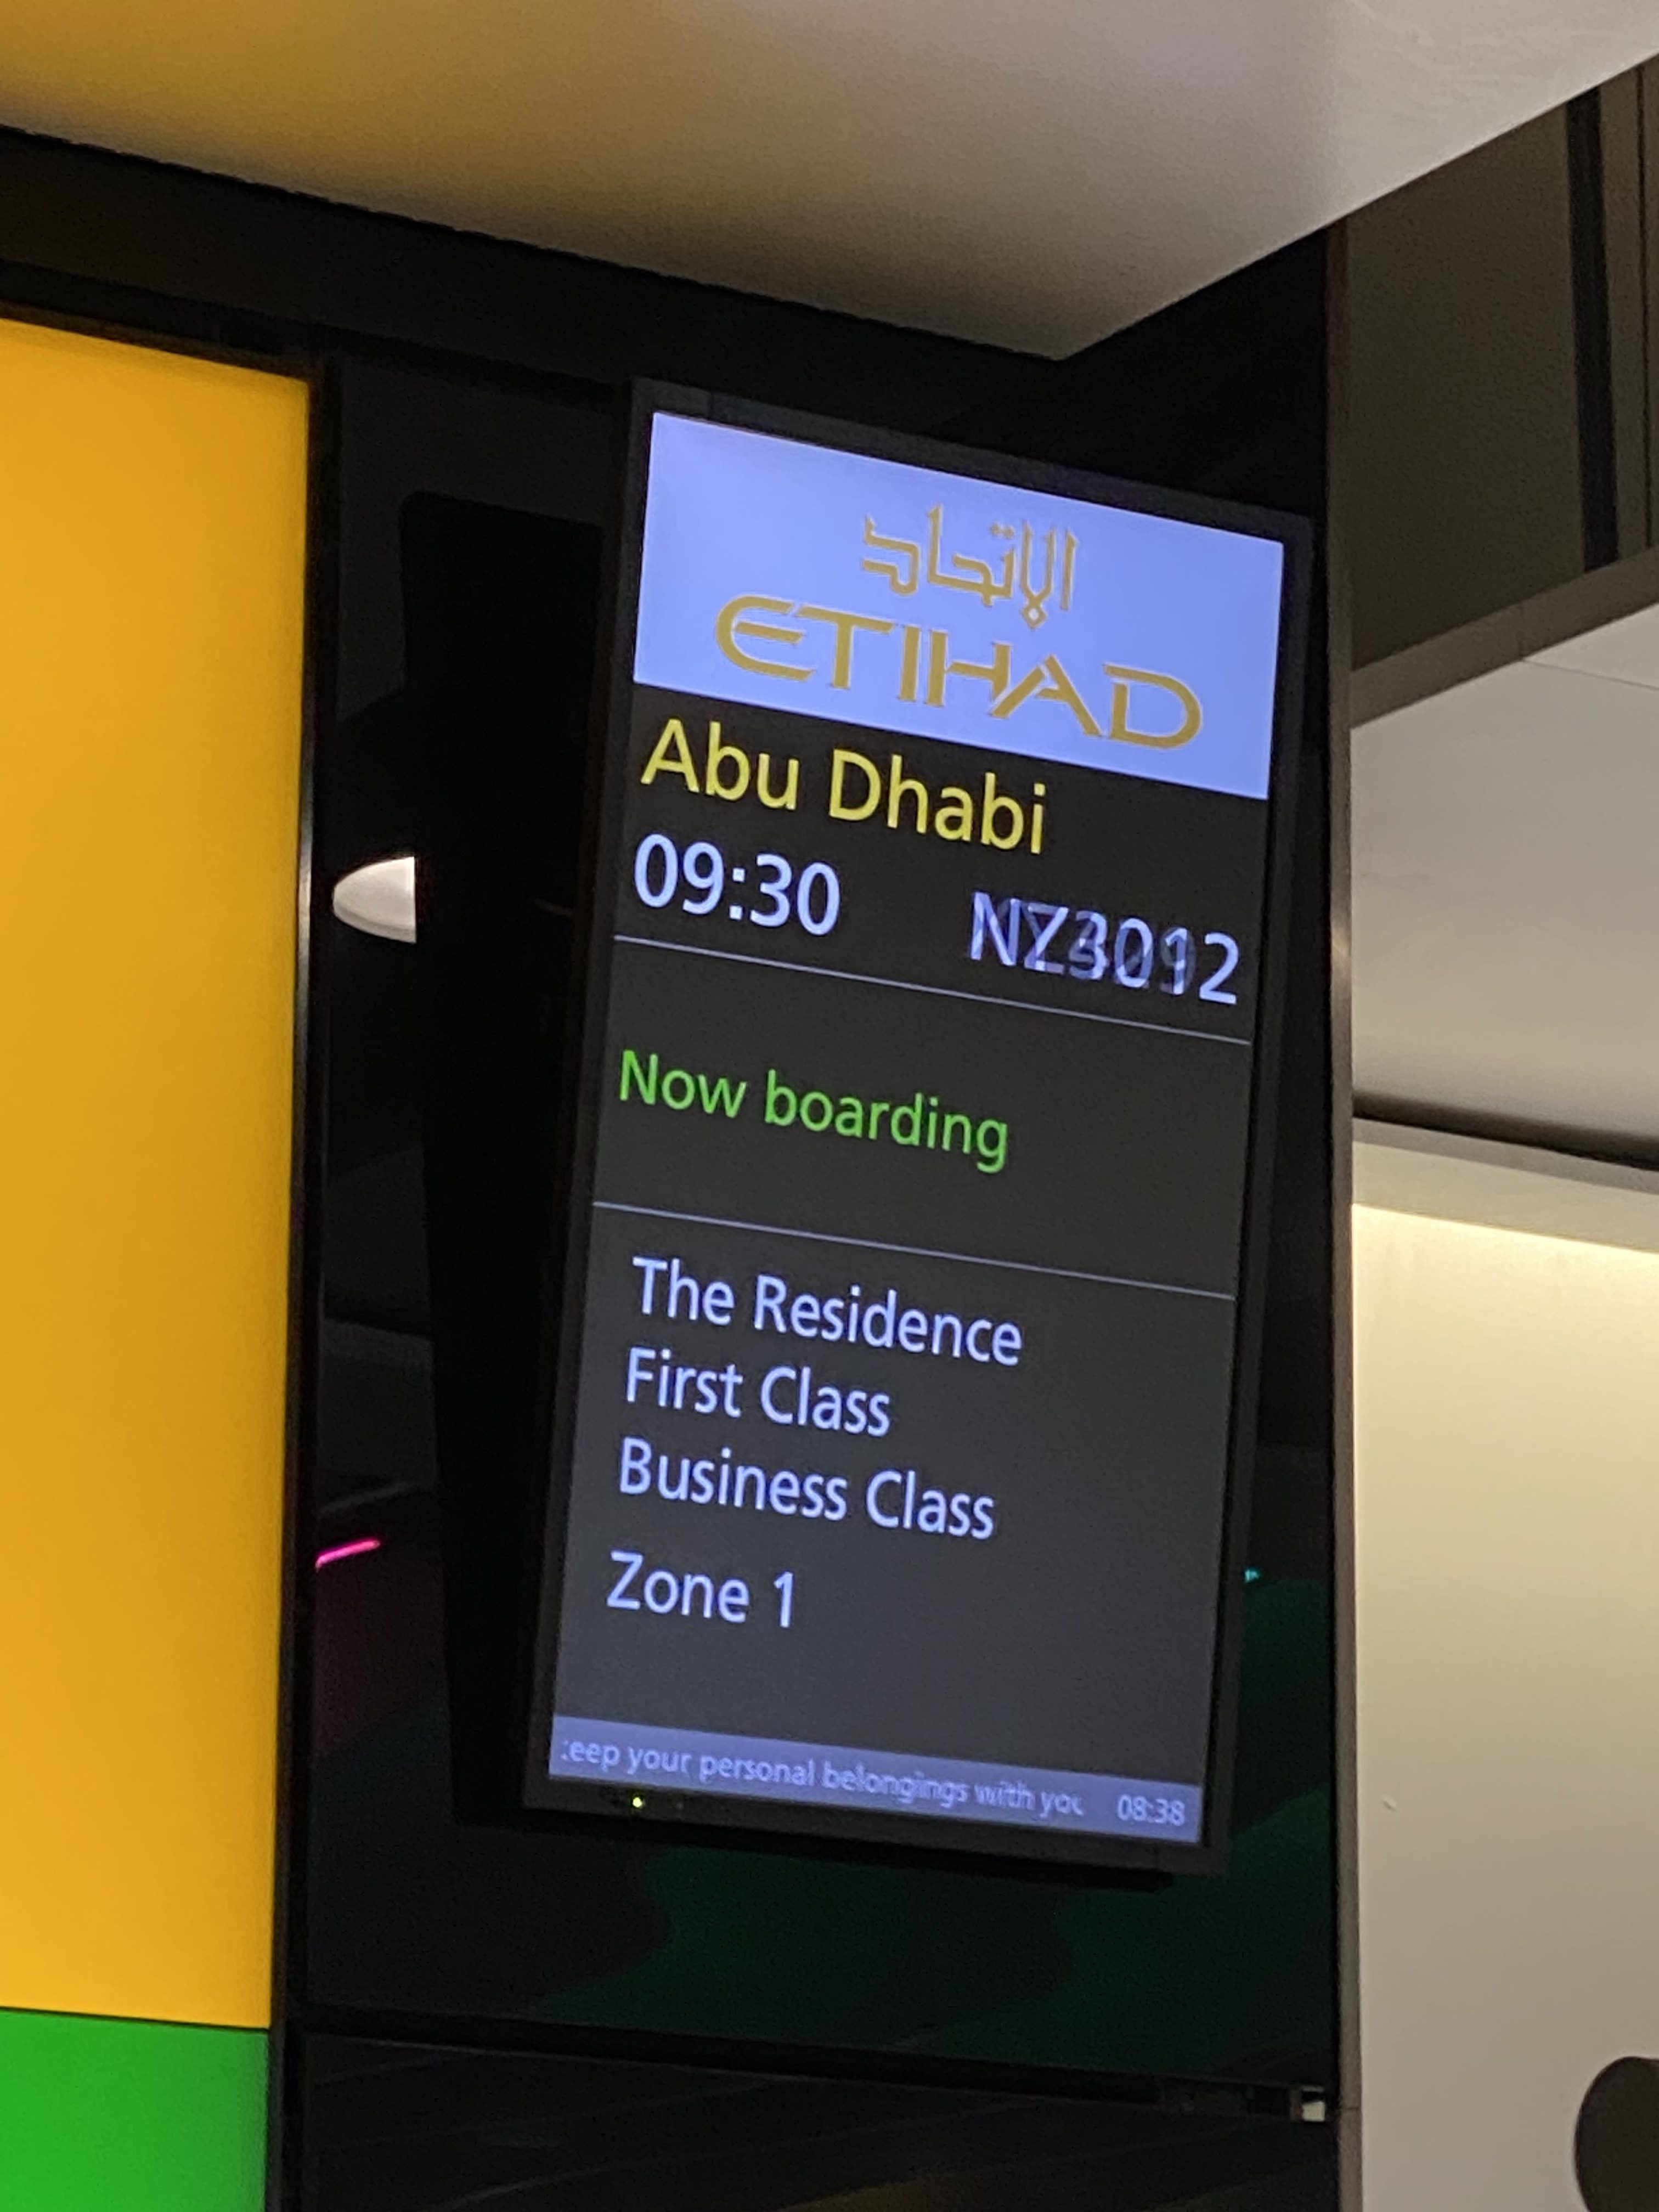 Boarding Etihad Airways EY12 from London (LHR) to Abu Dhabi (AUH)